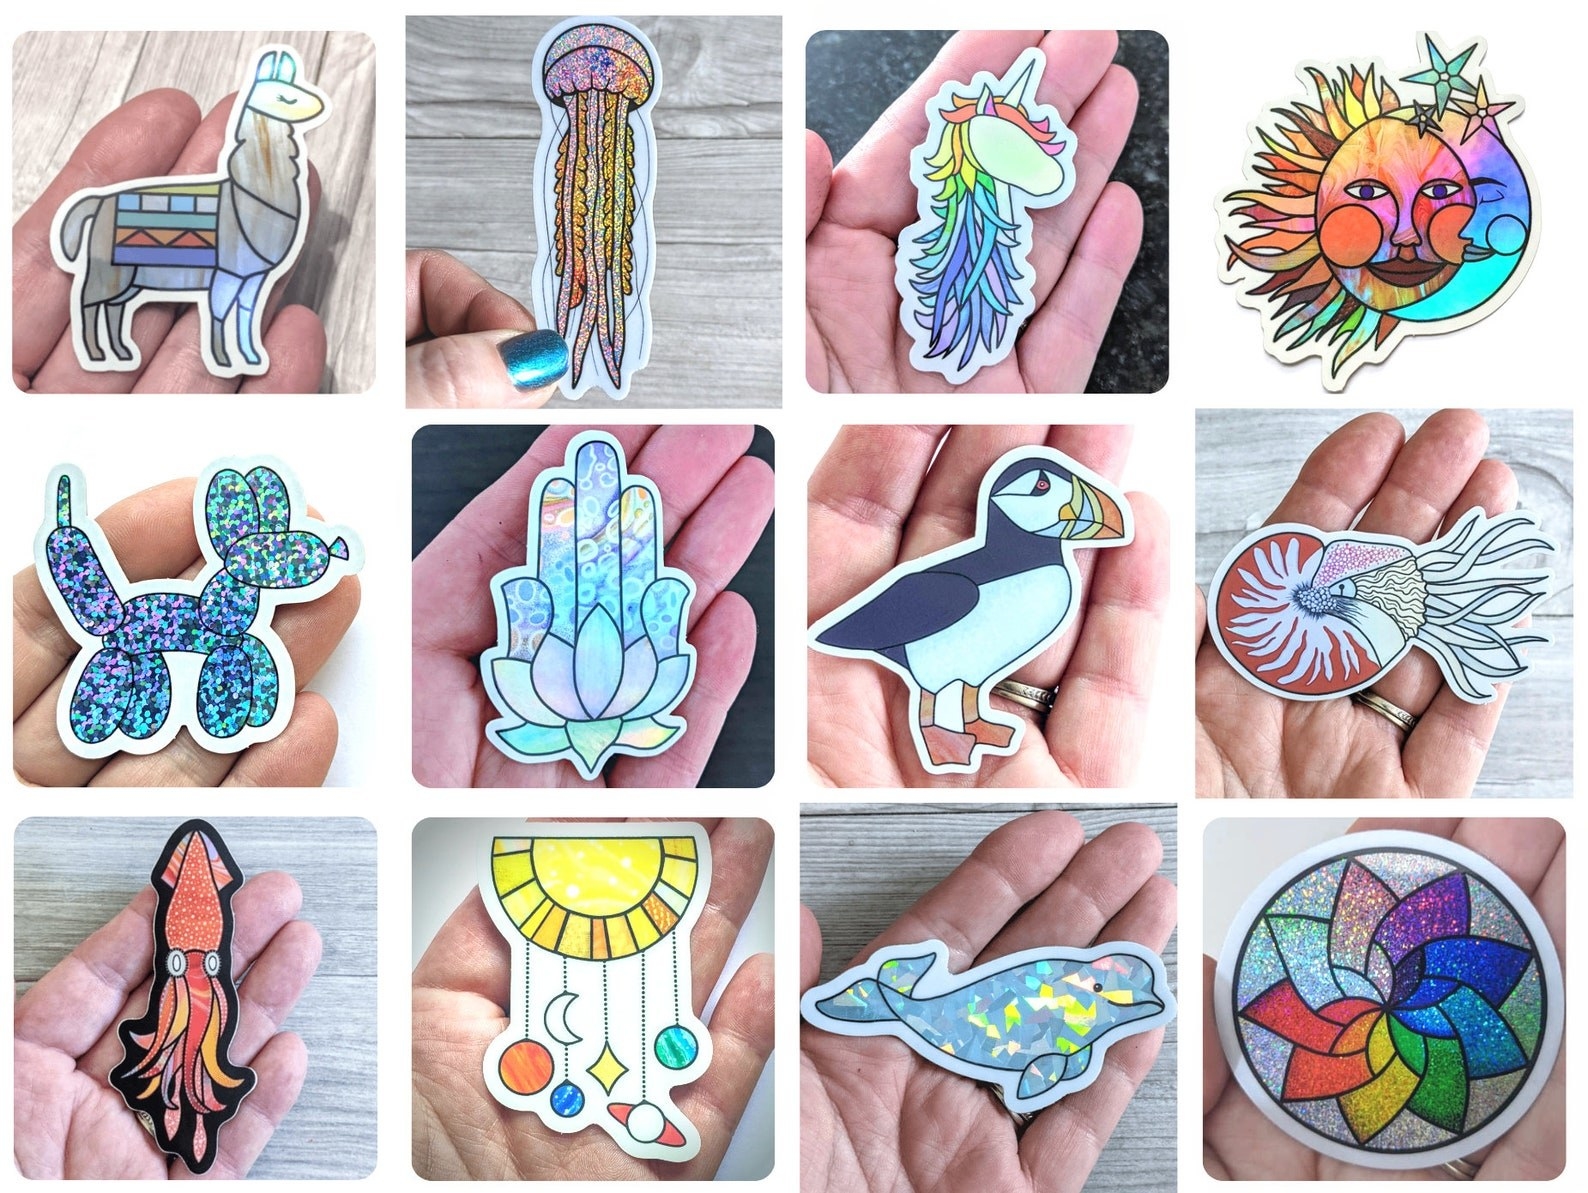 Hands holding assorted sticker designs